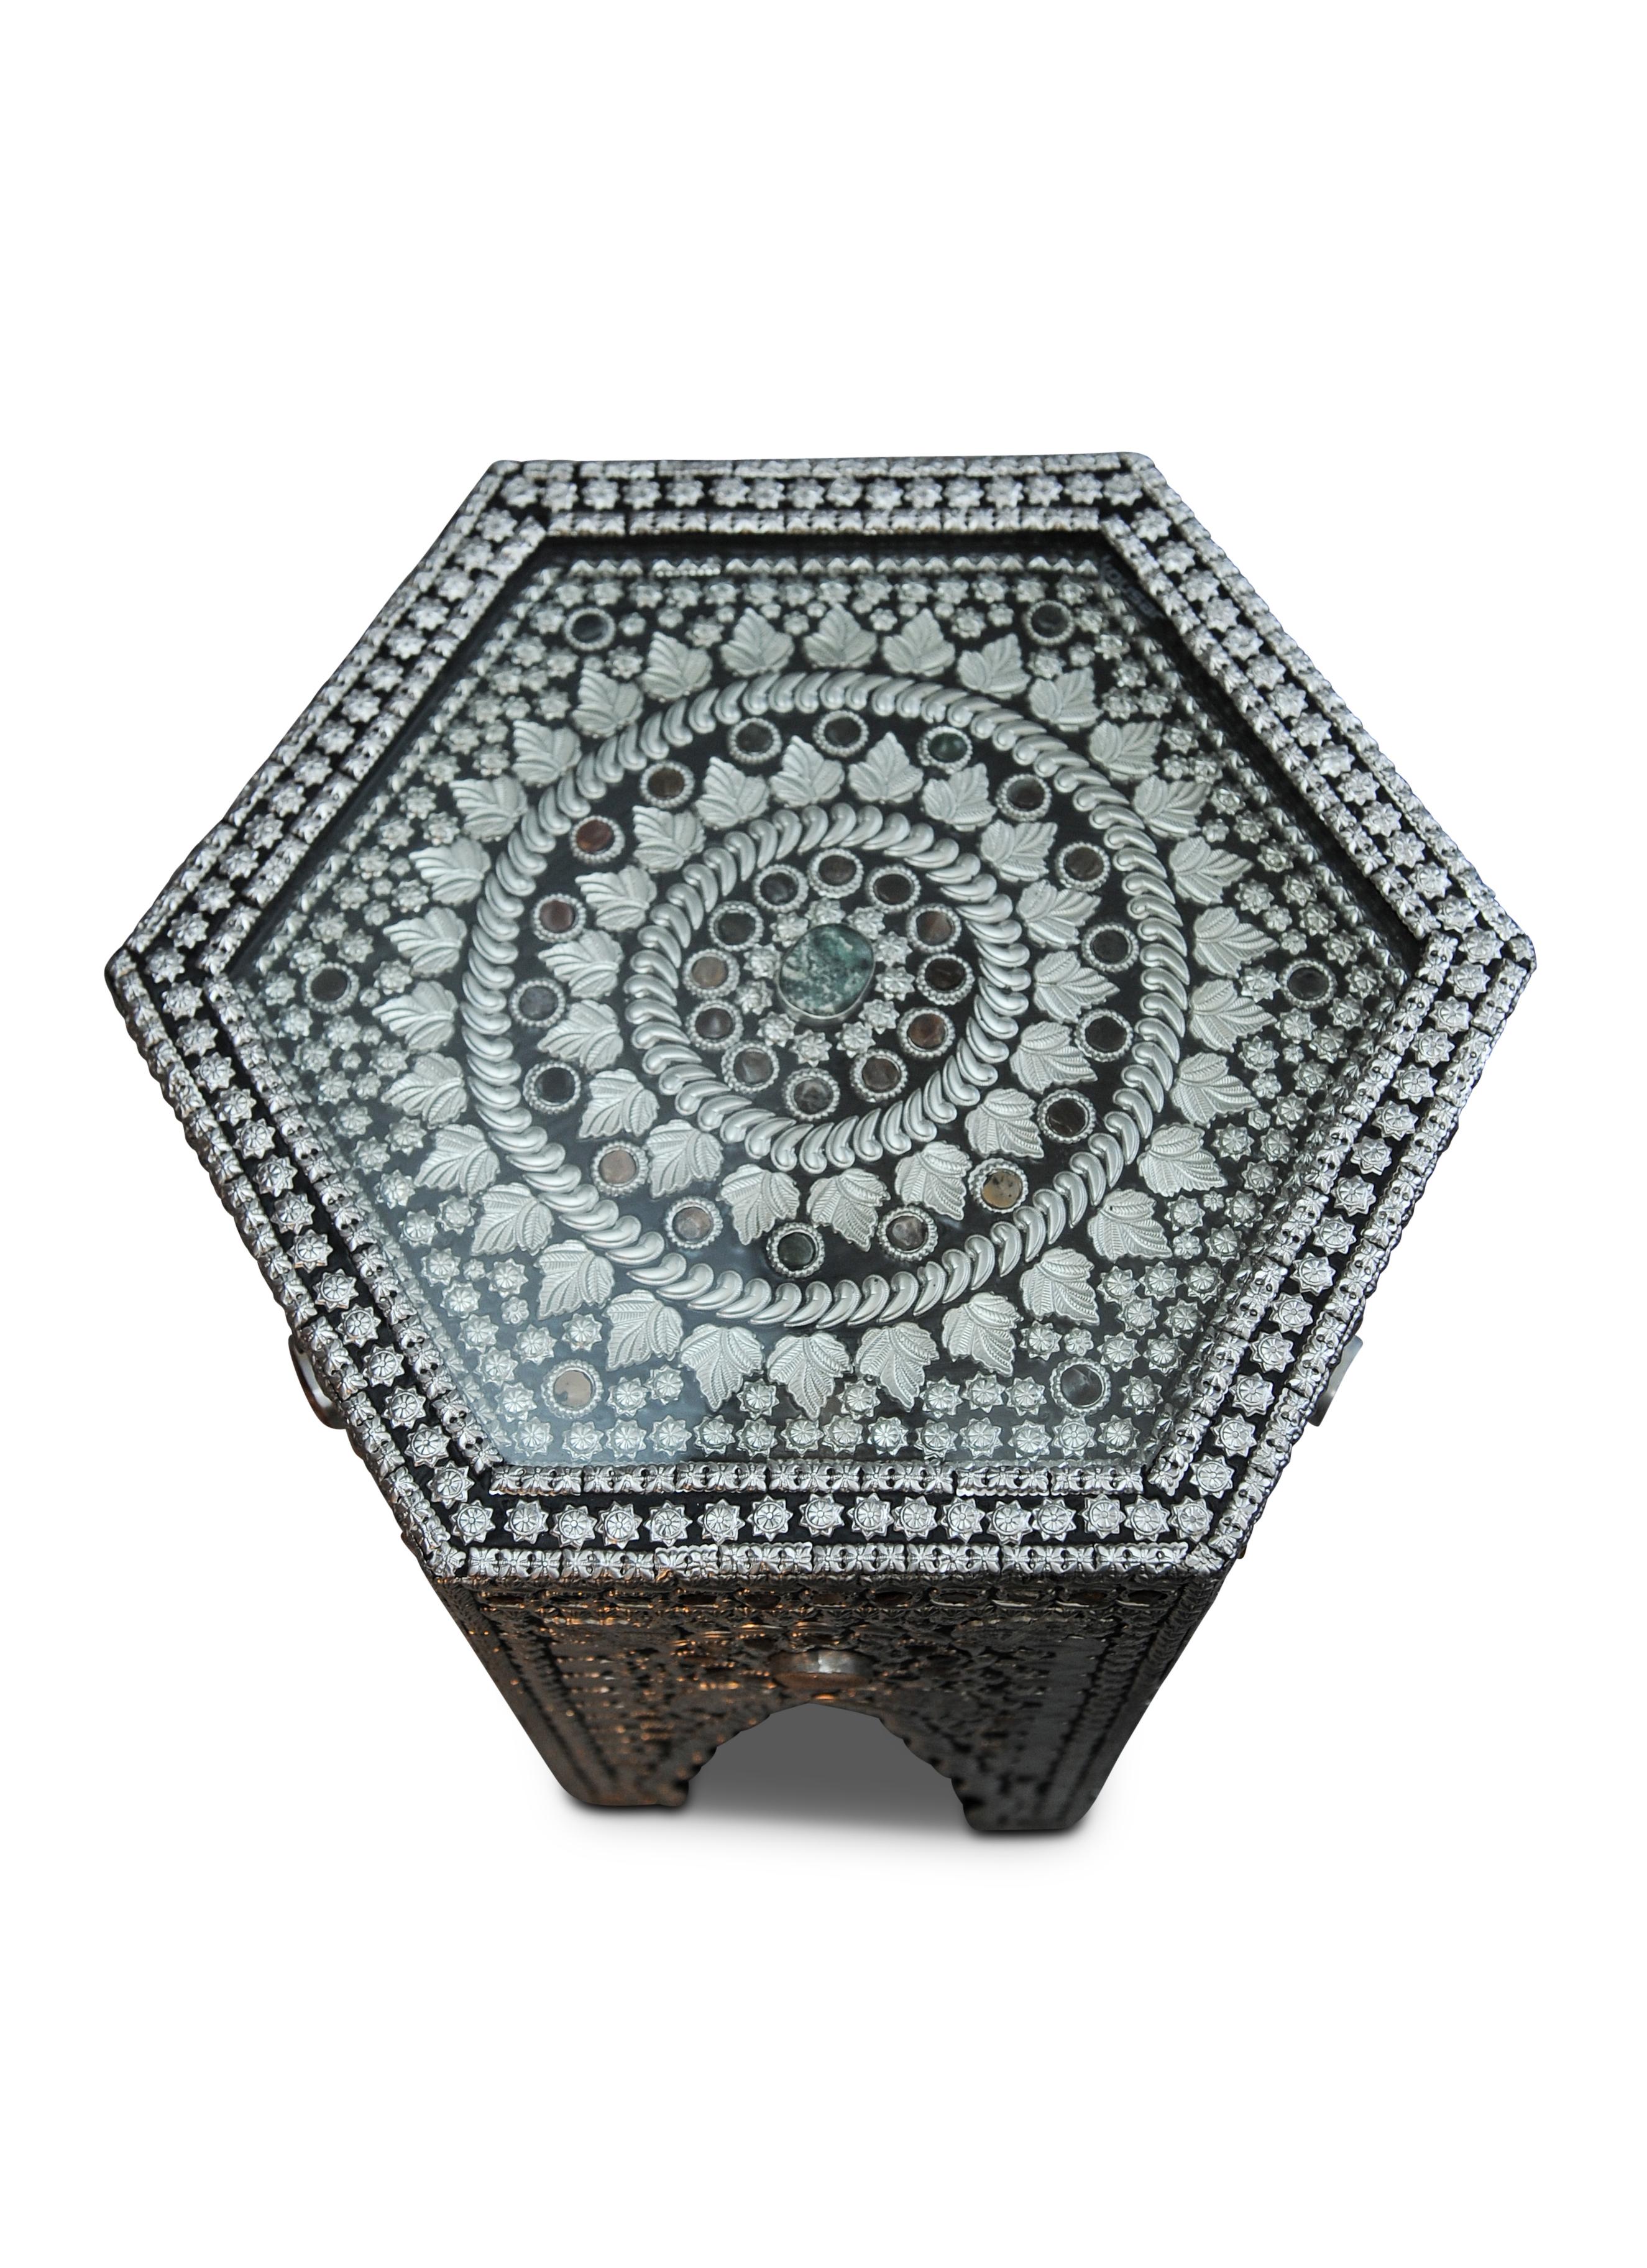 Islamic A Moorish Design Hexagonal Glazed Tea Table with Semi Precious Stones. For Sale